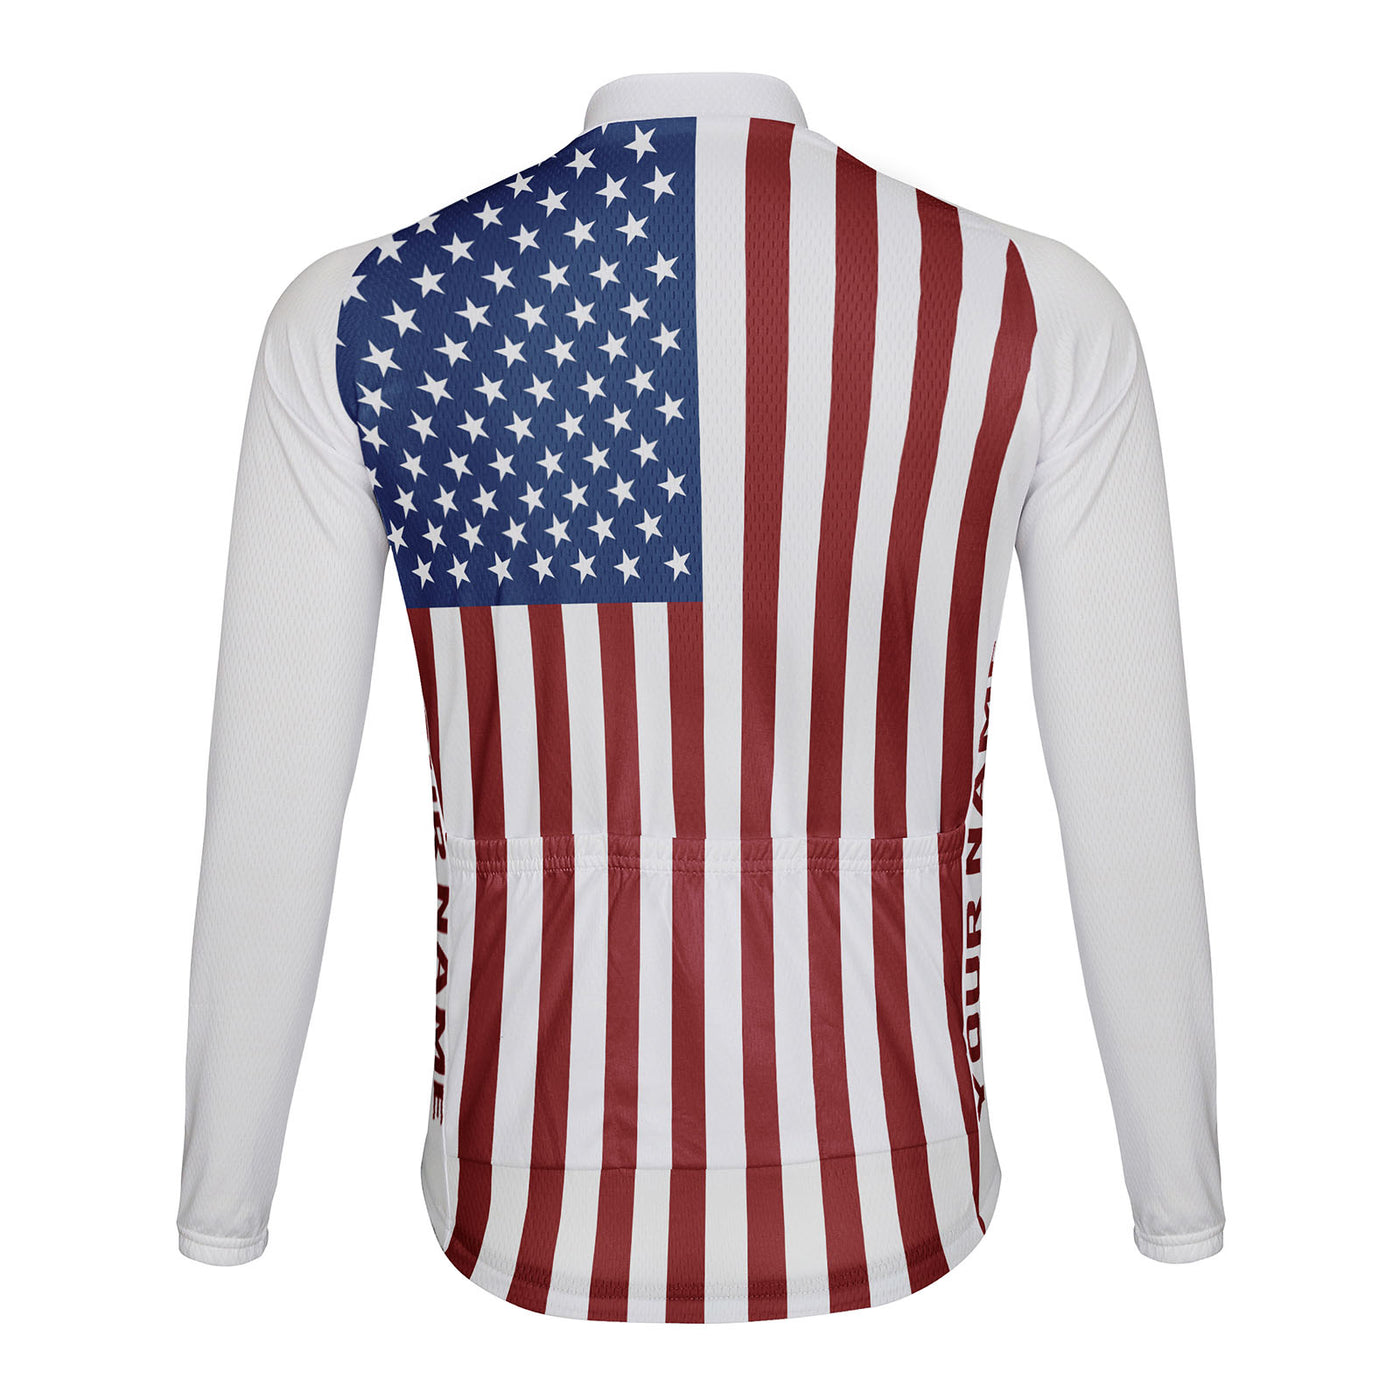 Customized Usa Flag Men's Cycling Jersey Long Sleeve